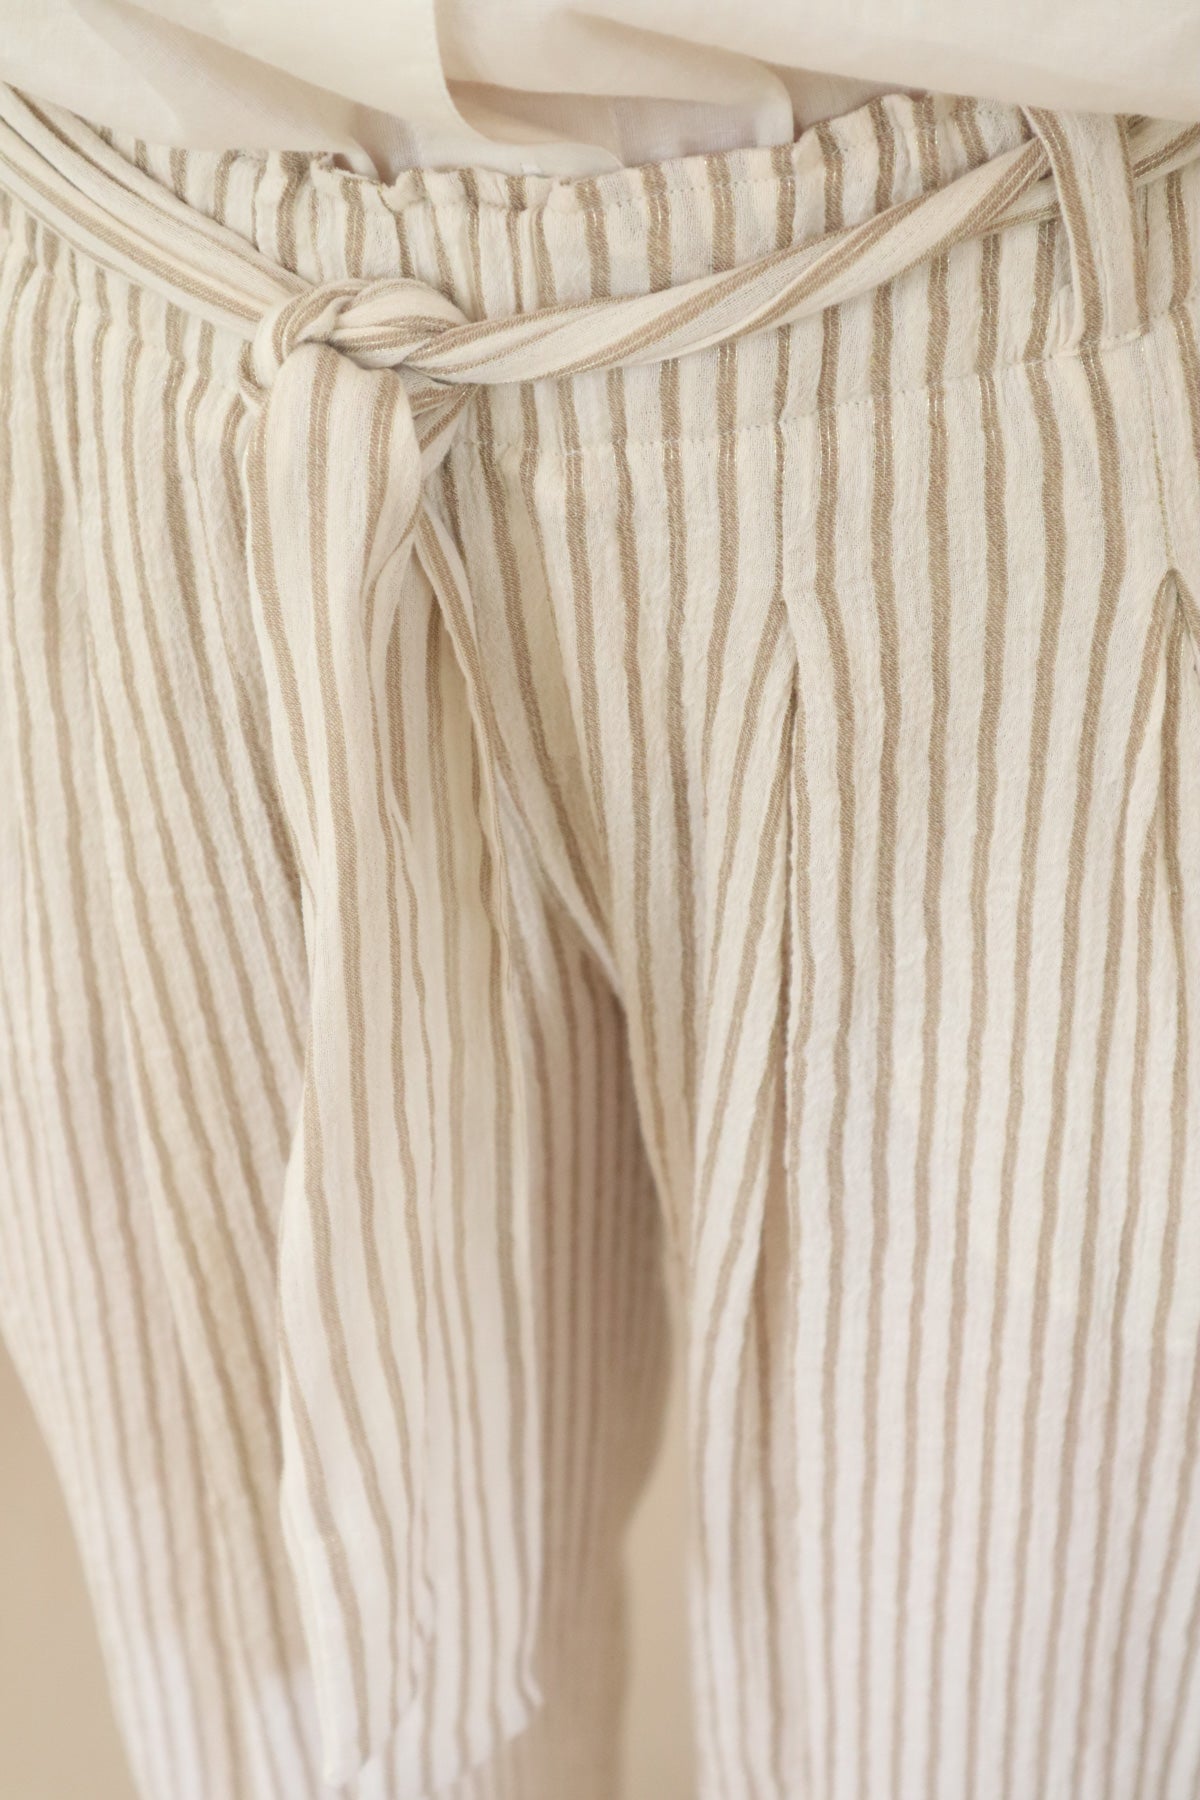 Pamano Pants - Striped Print